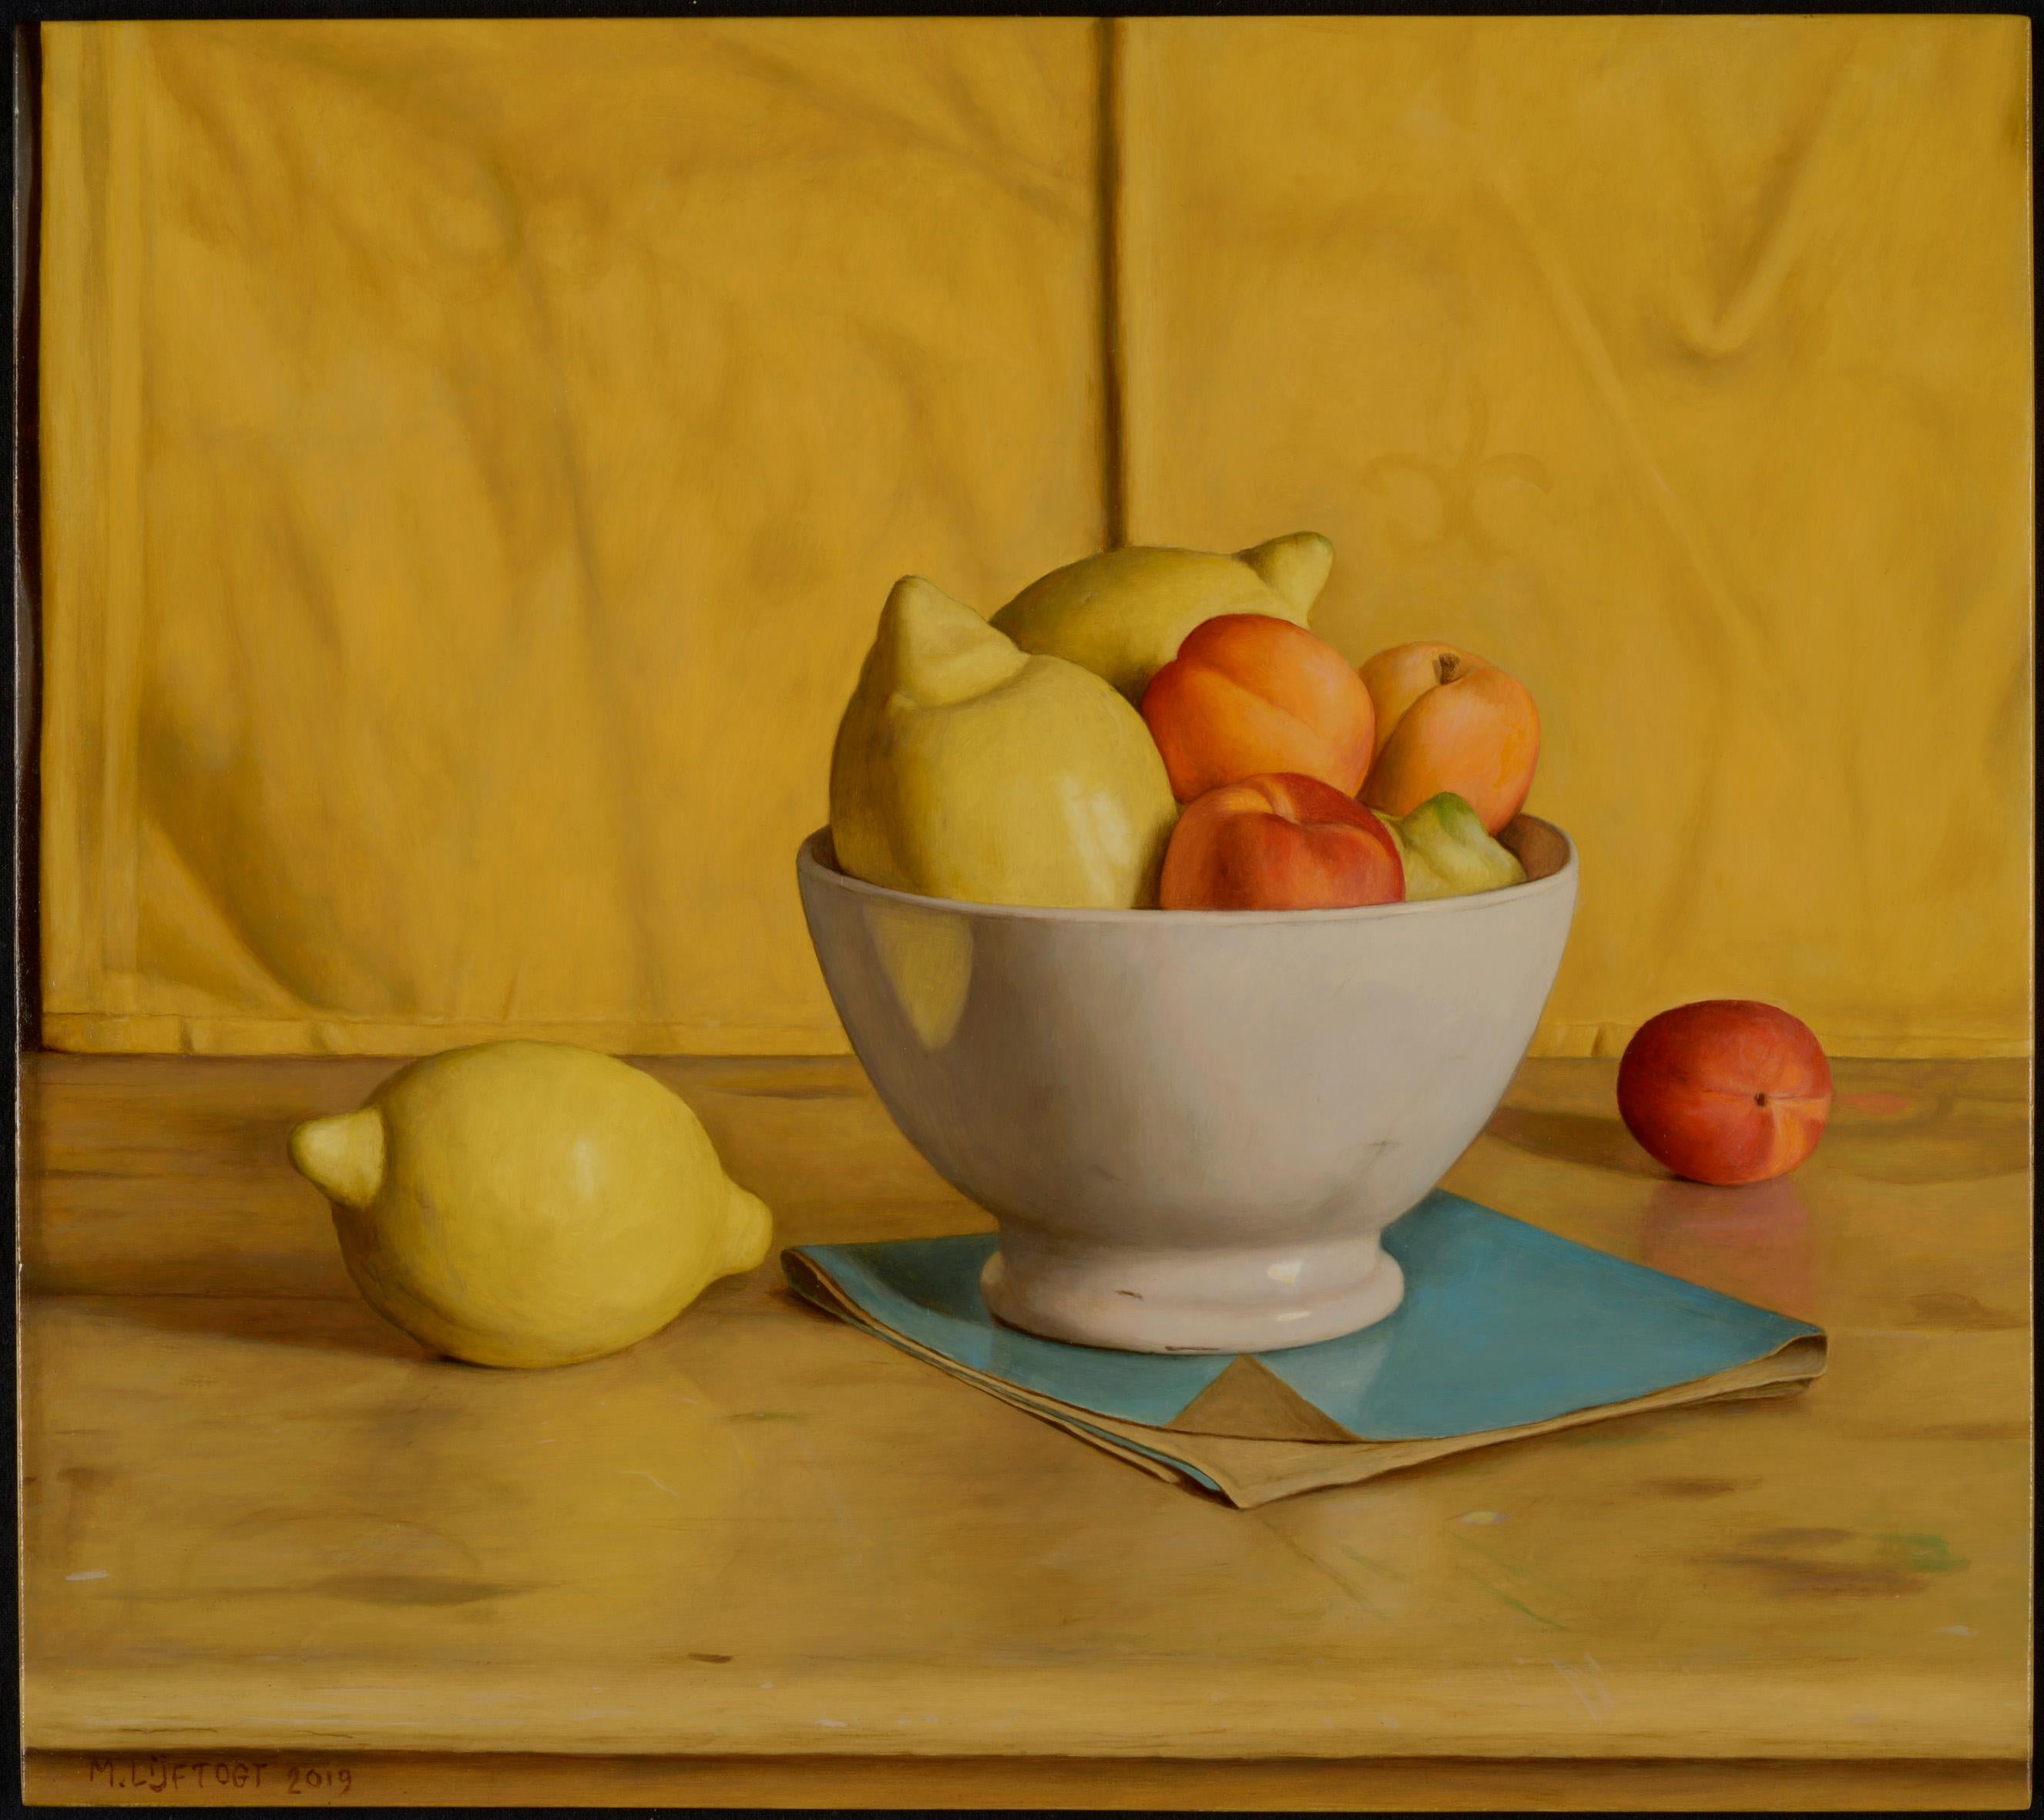 Vibrant & Vivid Still life painting 'Yellow Napkin' with lemons, peaches & Bowl